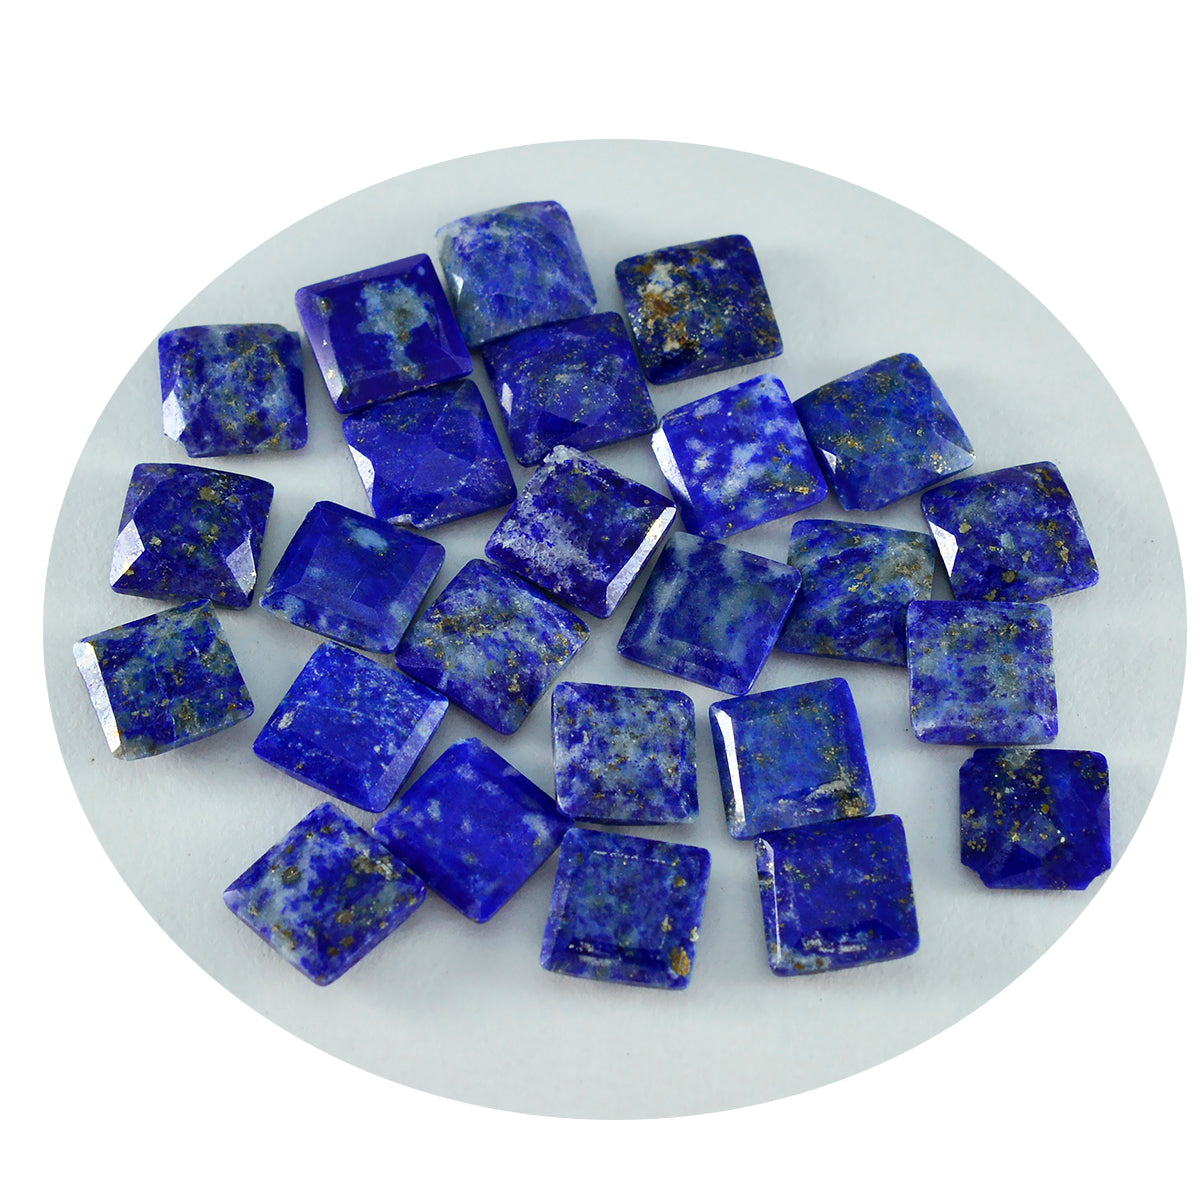 Riyogems 1PC Real Blue Lapis Lazuli Facet 6x6 mm Vierkante Vorm mooie kwaliteit Gem